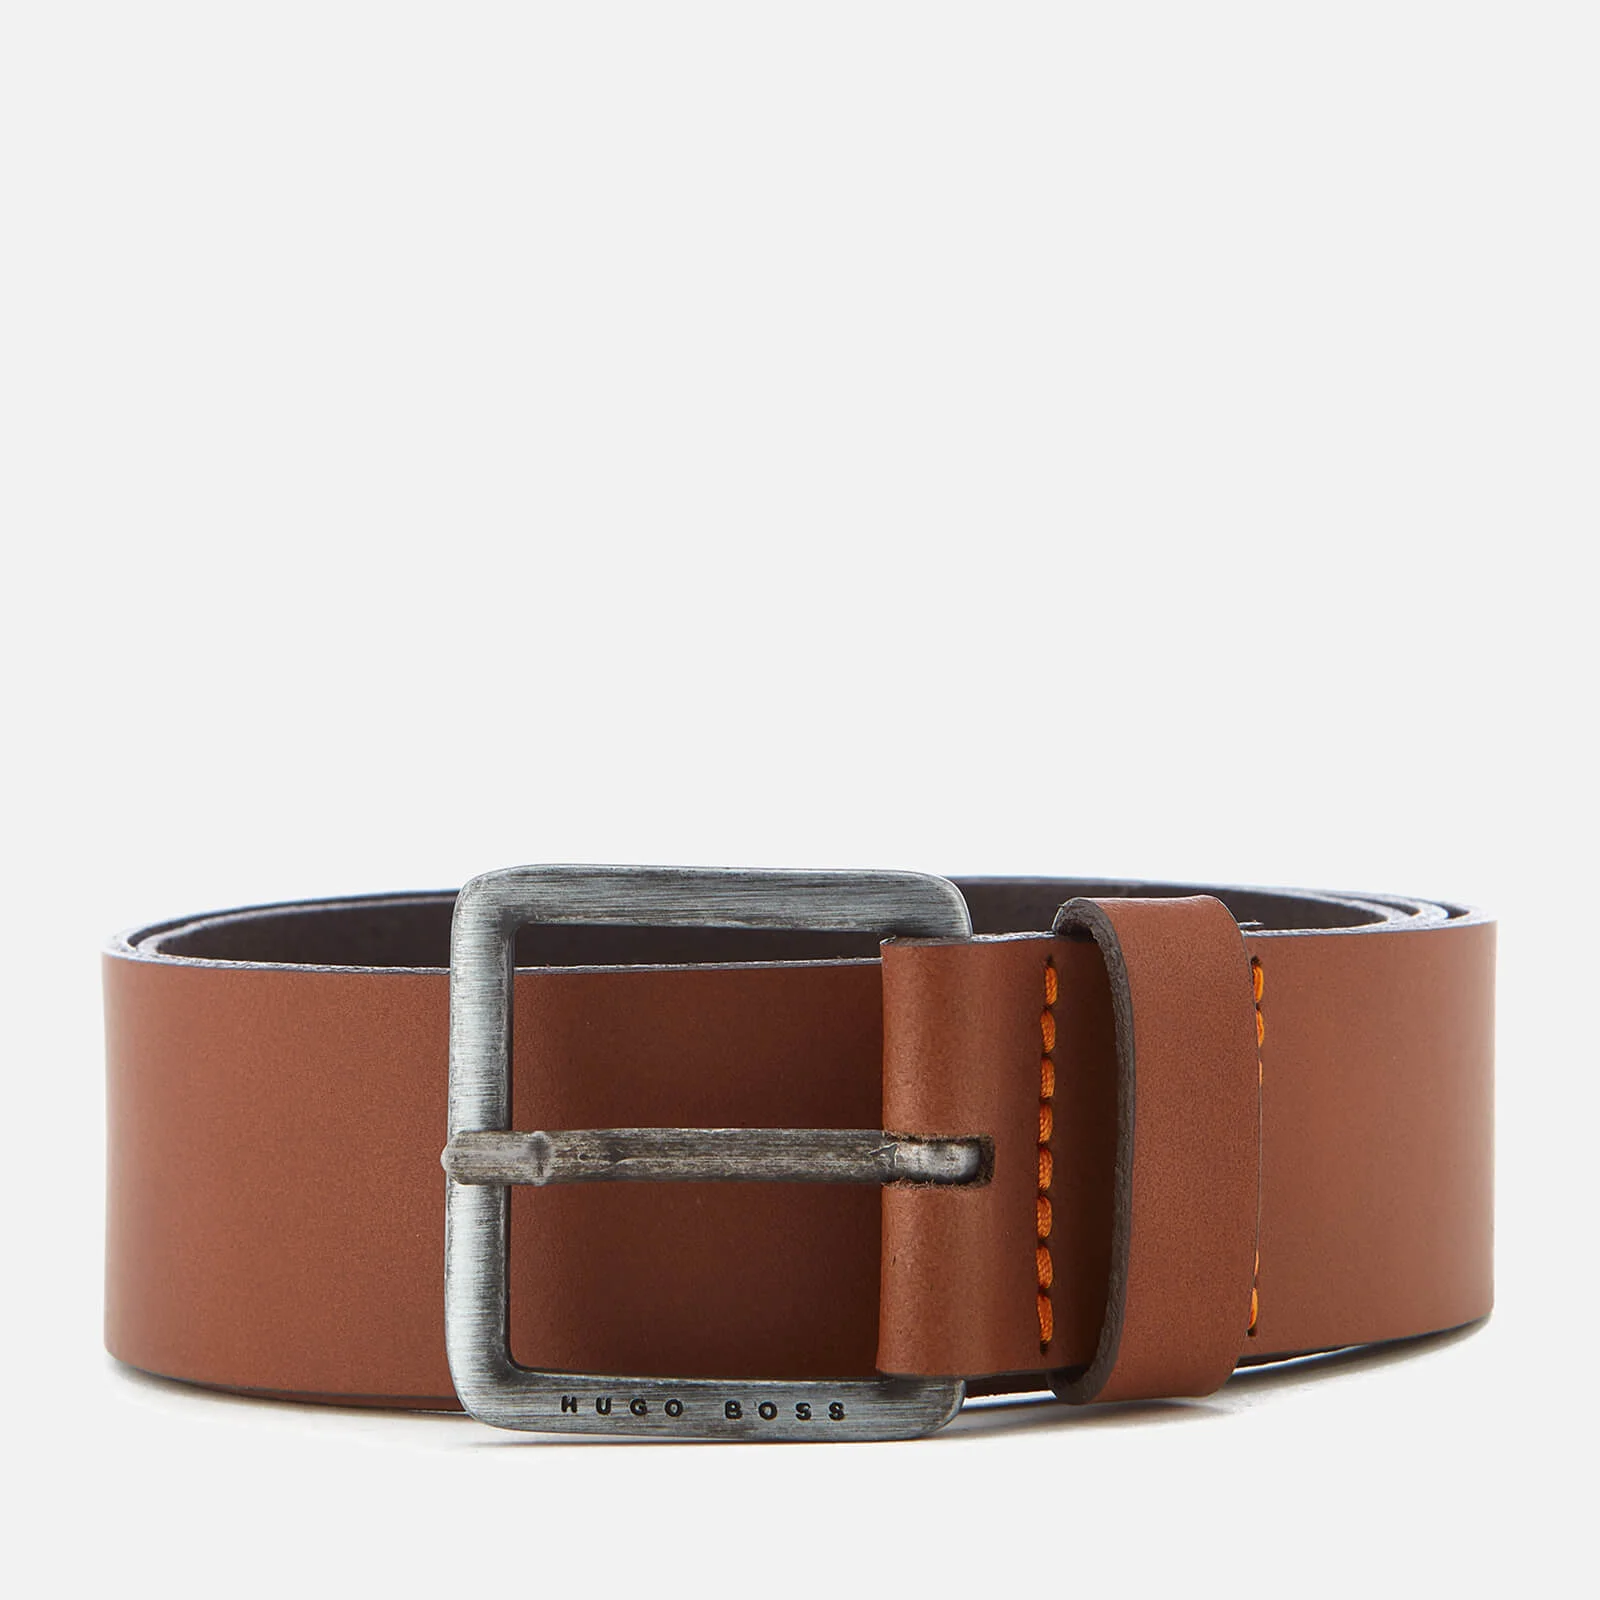 BOSS Orange Men's Jeeko Leather Belt - Medium Brown Image 1